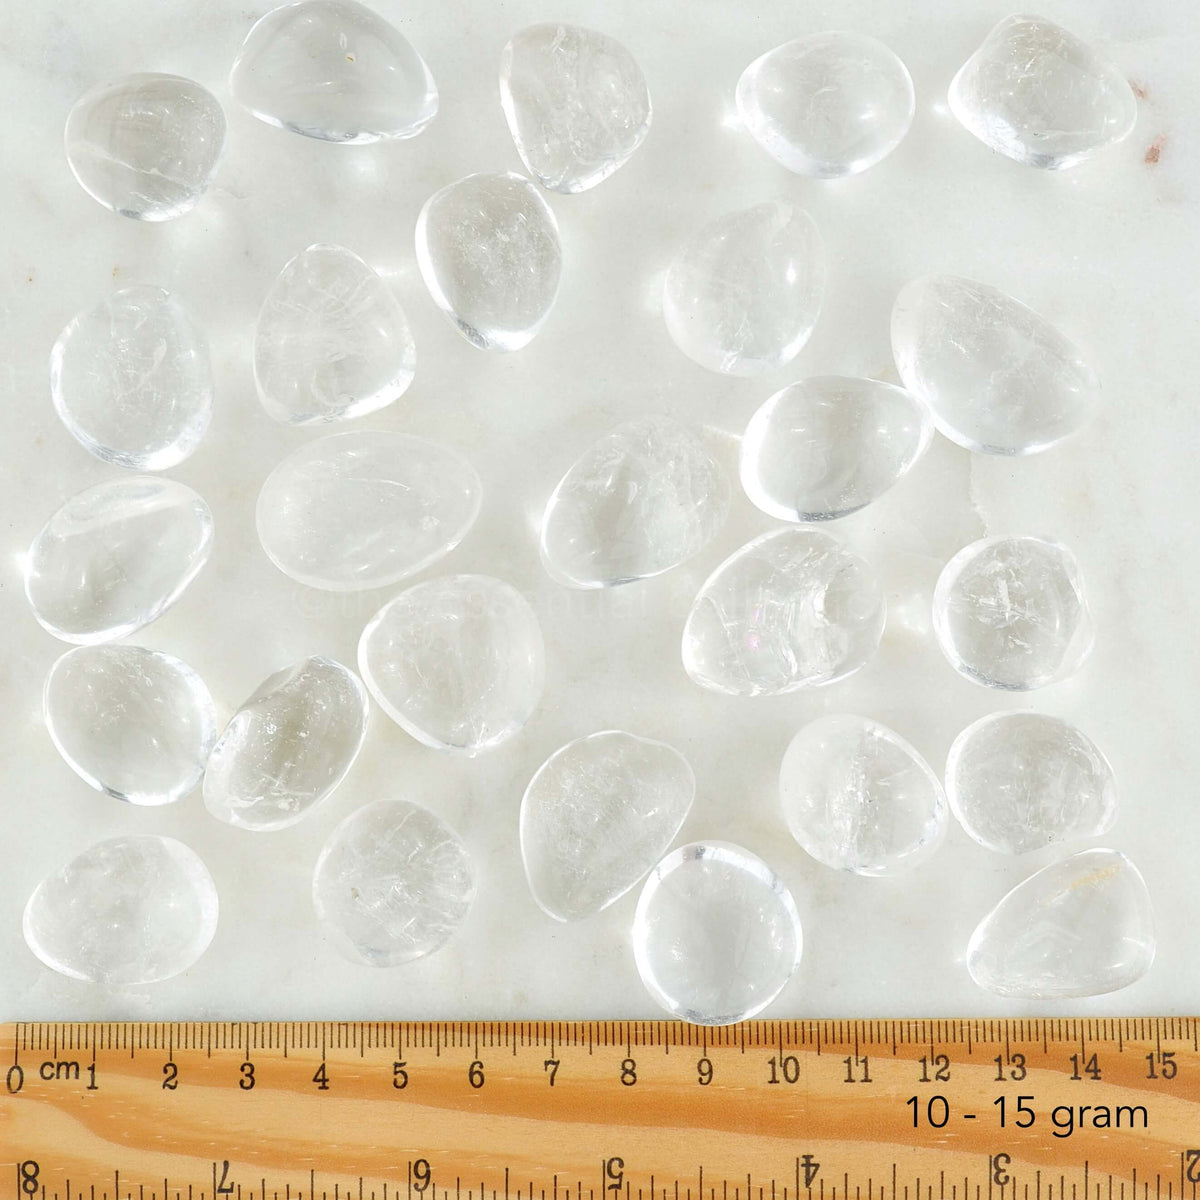 clear quartz tumbled crystals 10 to 15 gram size